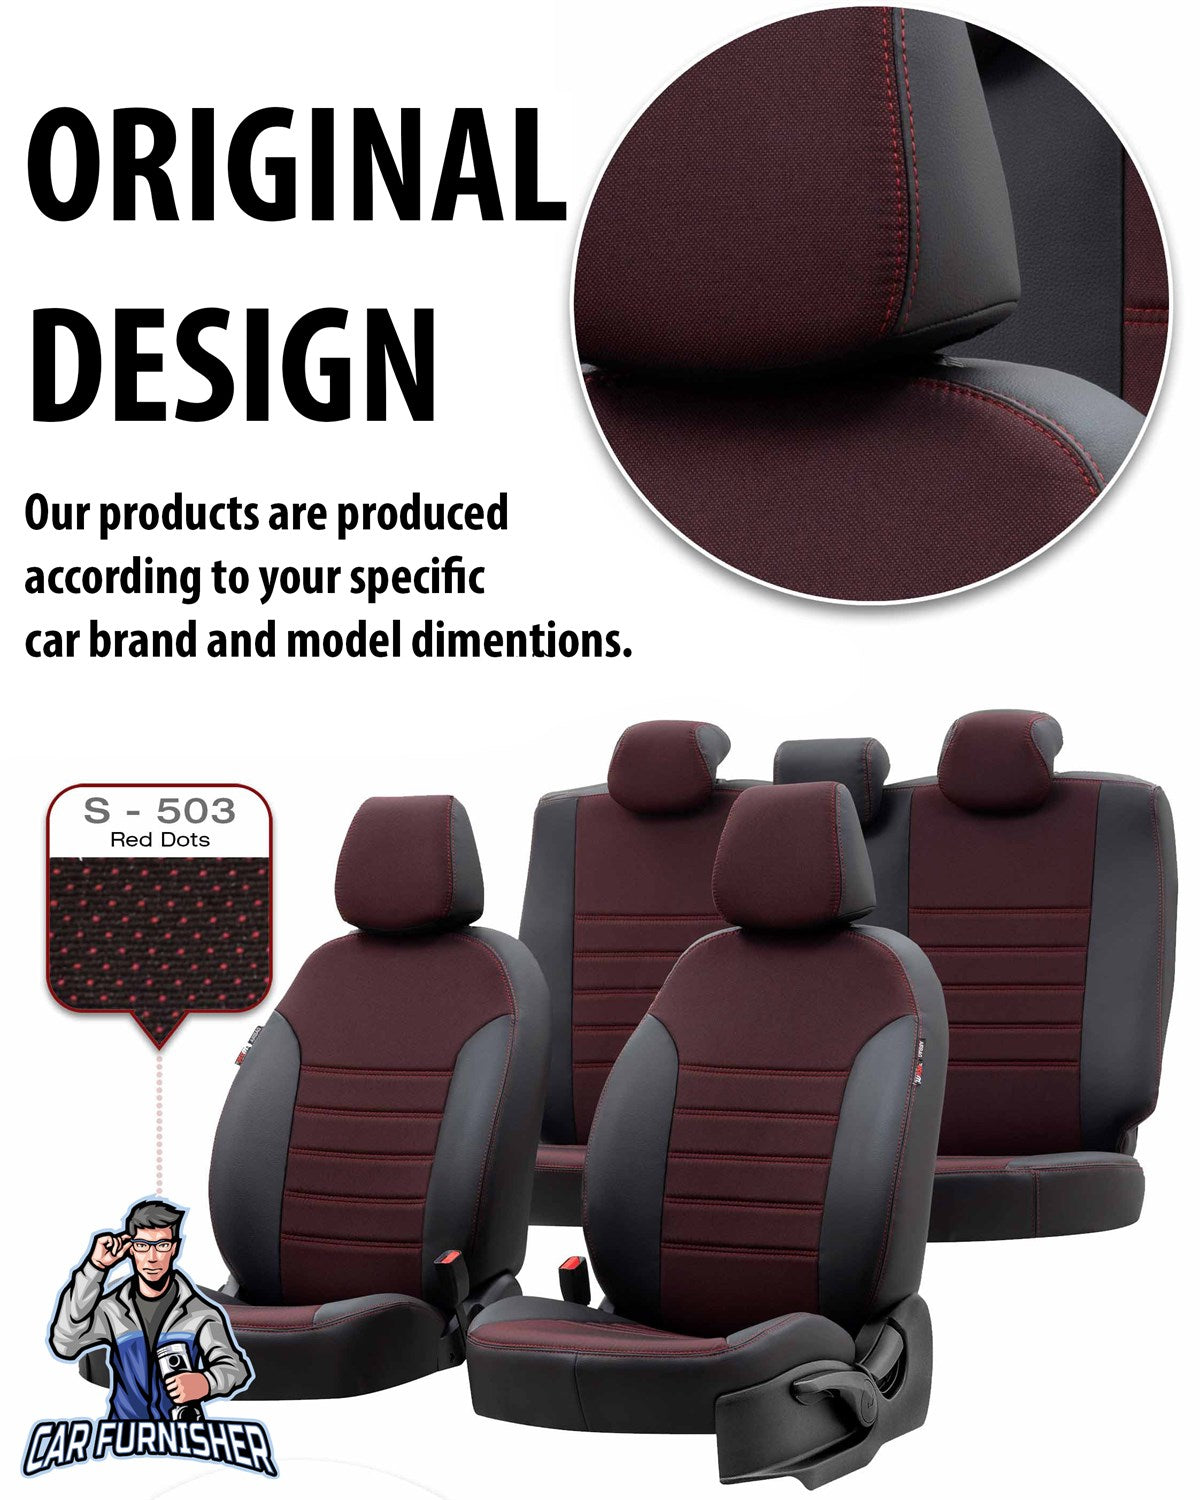 Honda CRV Seat Covers Paris Leather & Jacquard Design Blue Leather & Jacquard Fabric